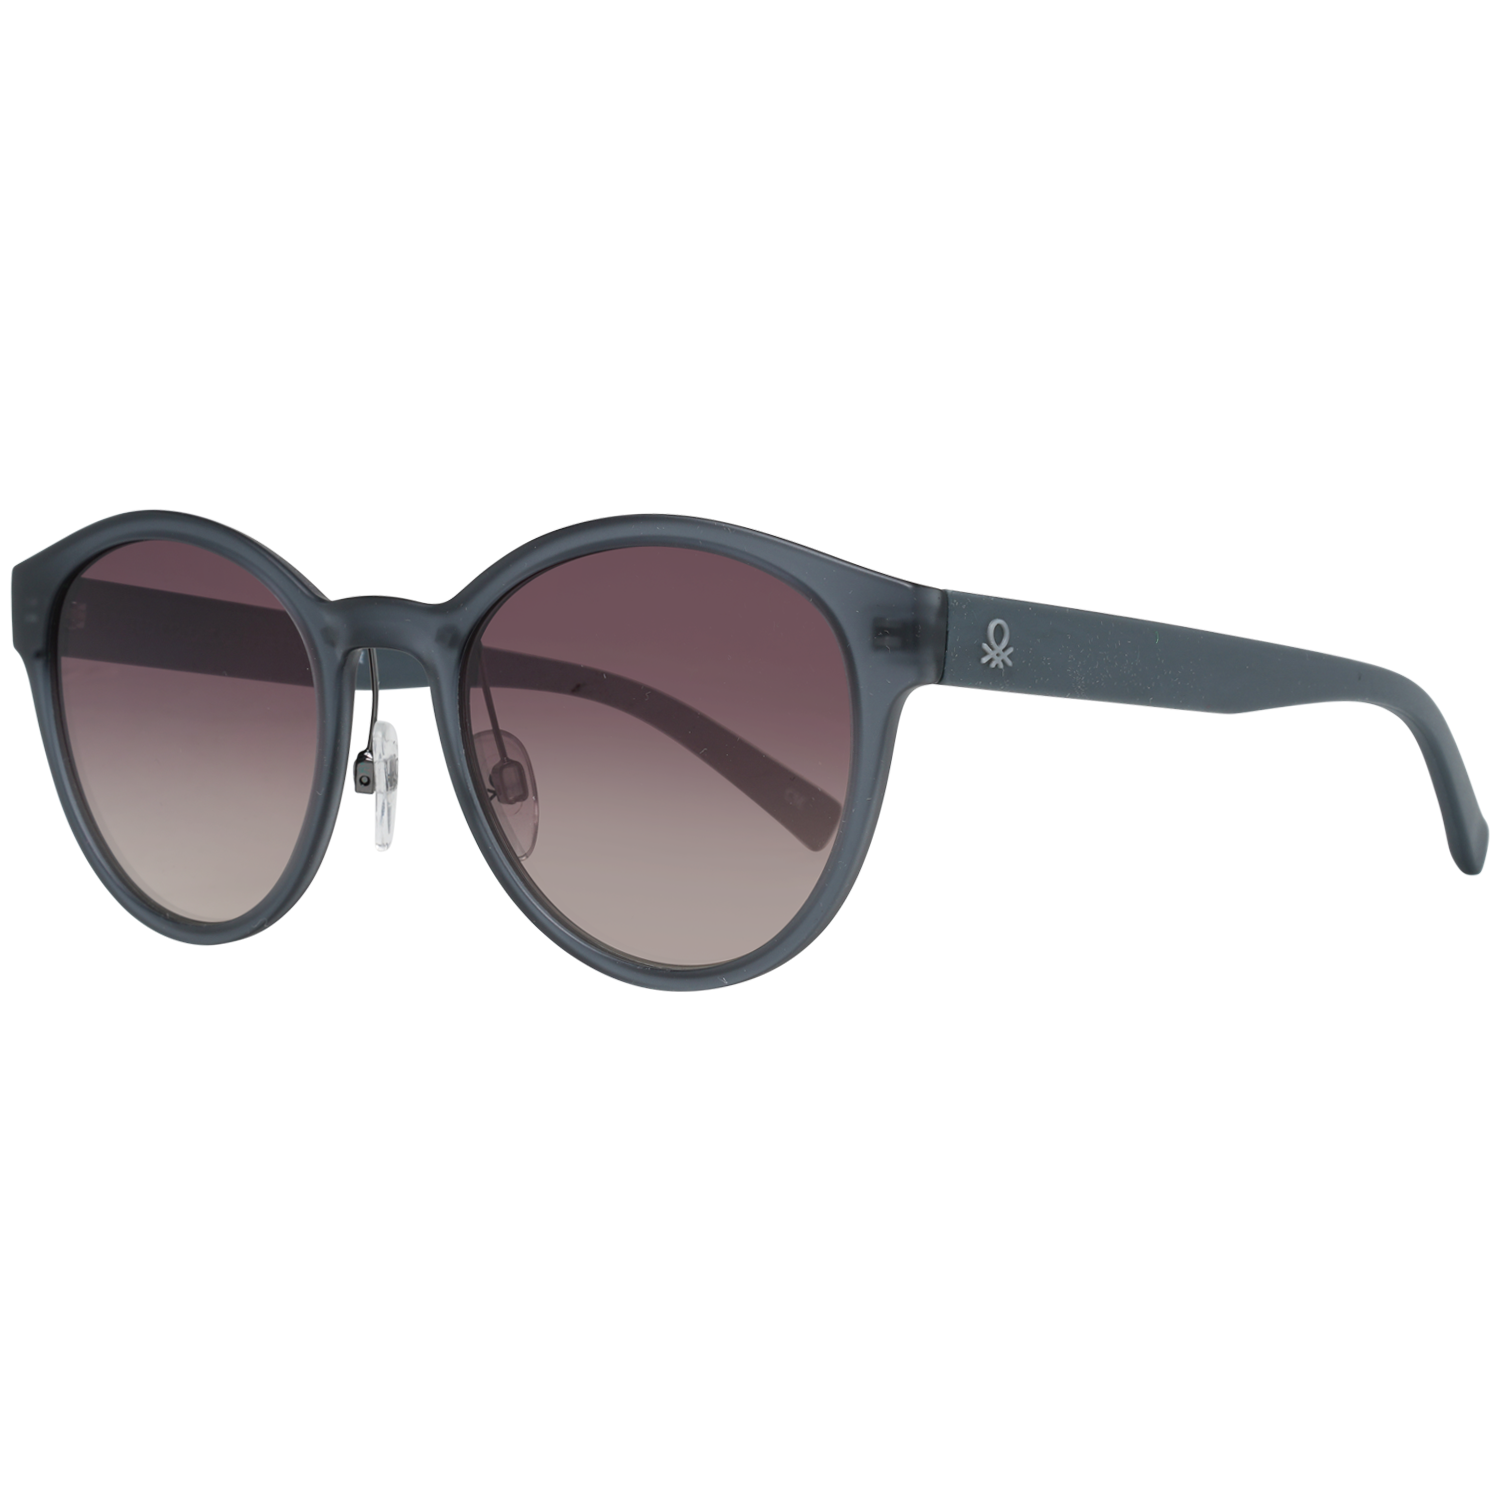 Benetton Sunglasses BE5009 921 52 Grey